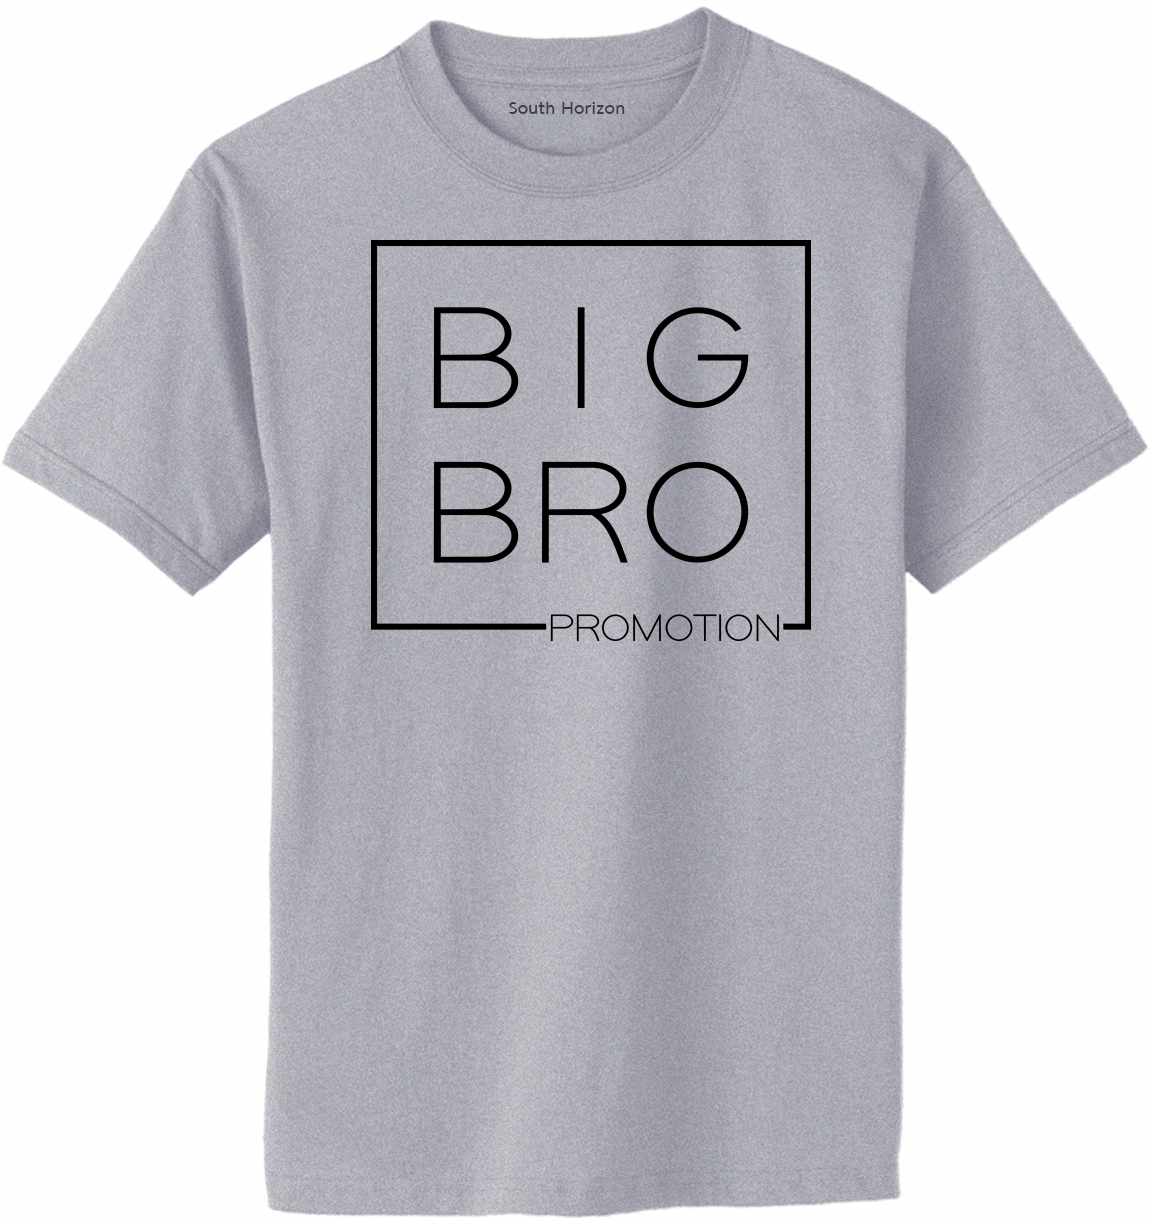 Big Bro Promotion - Big Brother - Box on Adult T-Shirt (#1330-1)